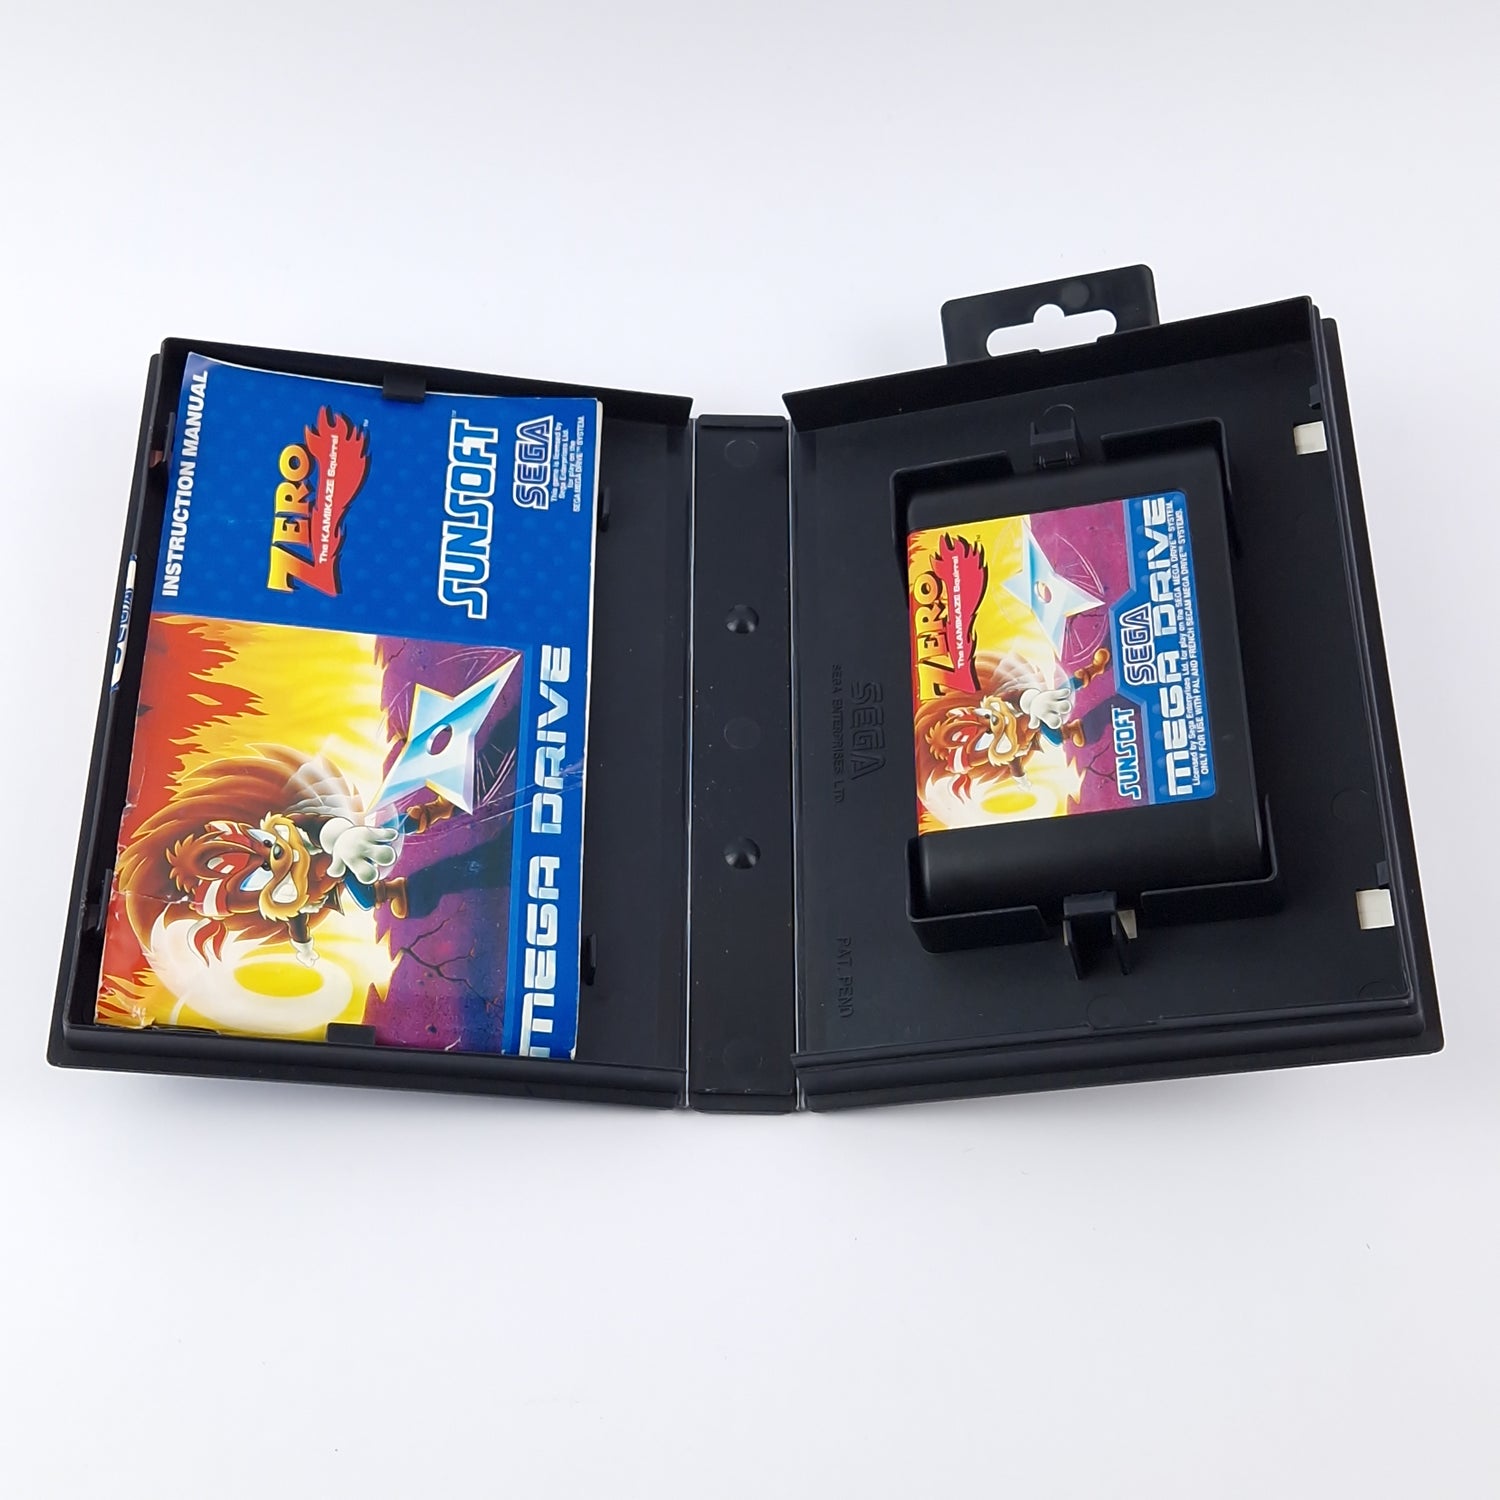 Sega Mega Drive Spiel : ZERO The Kamikaze Squirrel - OVP Anleitung Modul | PAL